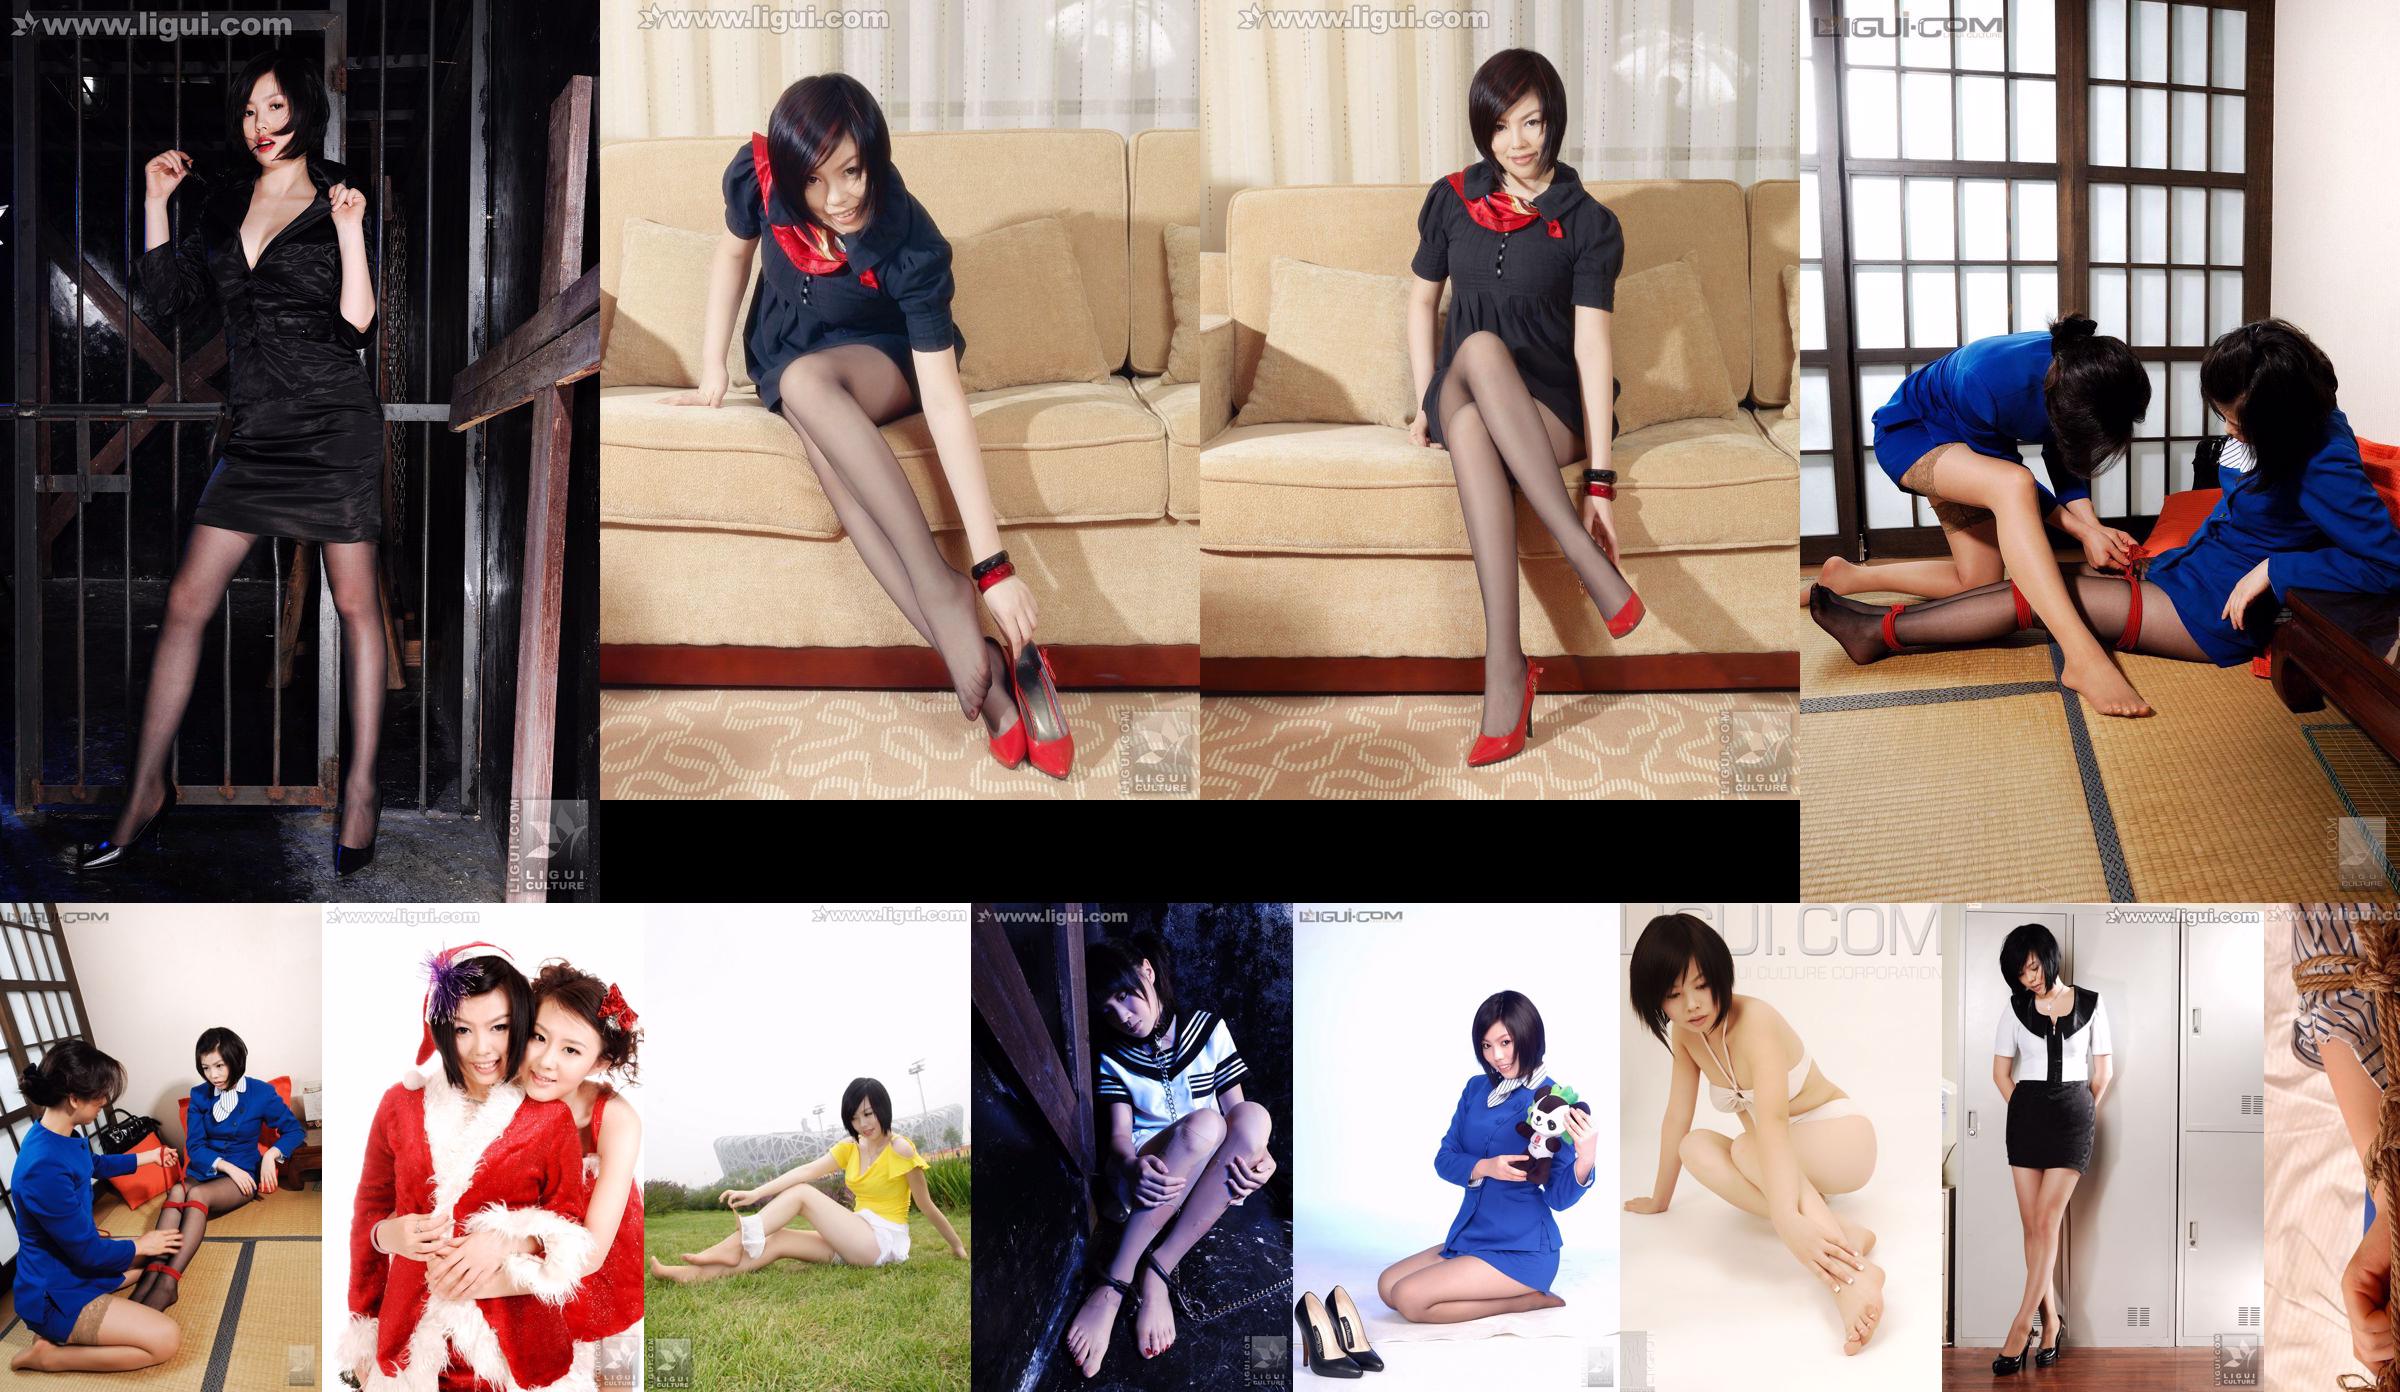 Модель "Cute Pajama Foot Show" [Ligui LiGui] Чулки, ступни, фото Изображение No.1e7a4d Страница 6